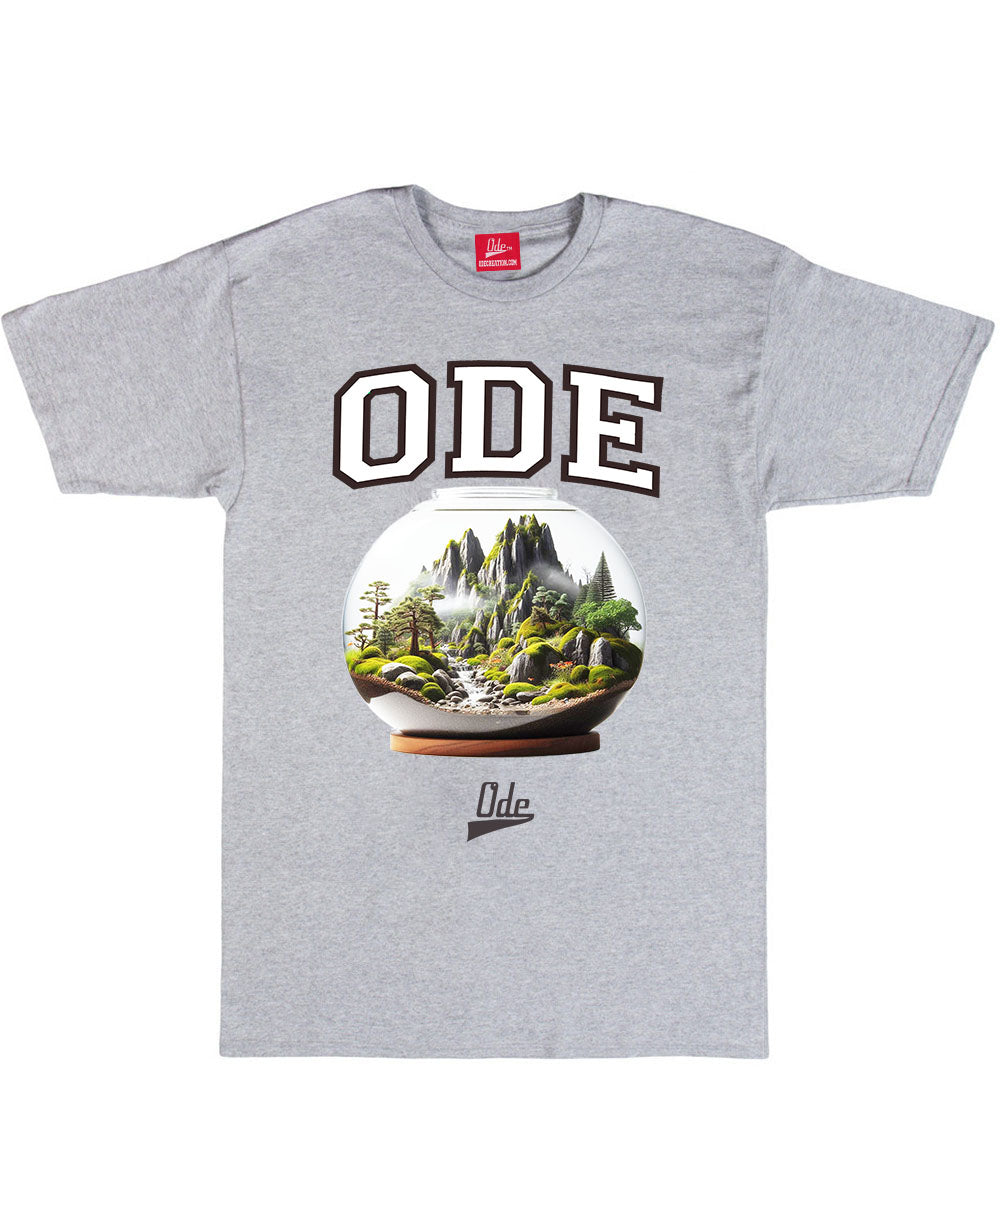 The ODE Globe (Vivarium) Grey T-Shirt